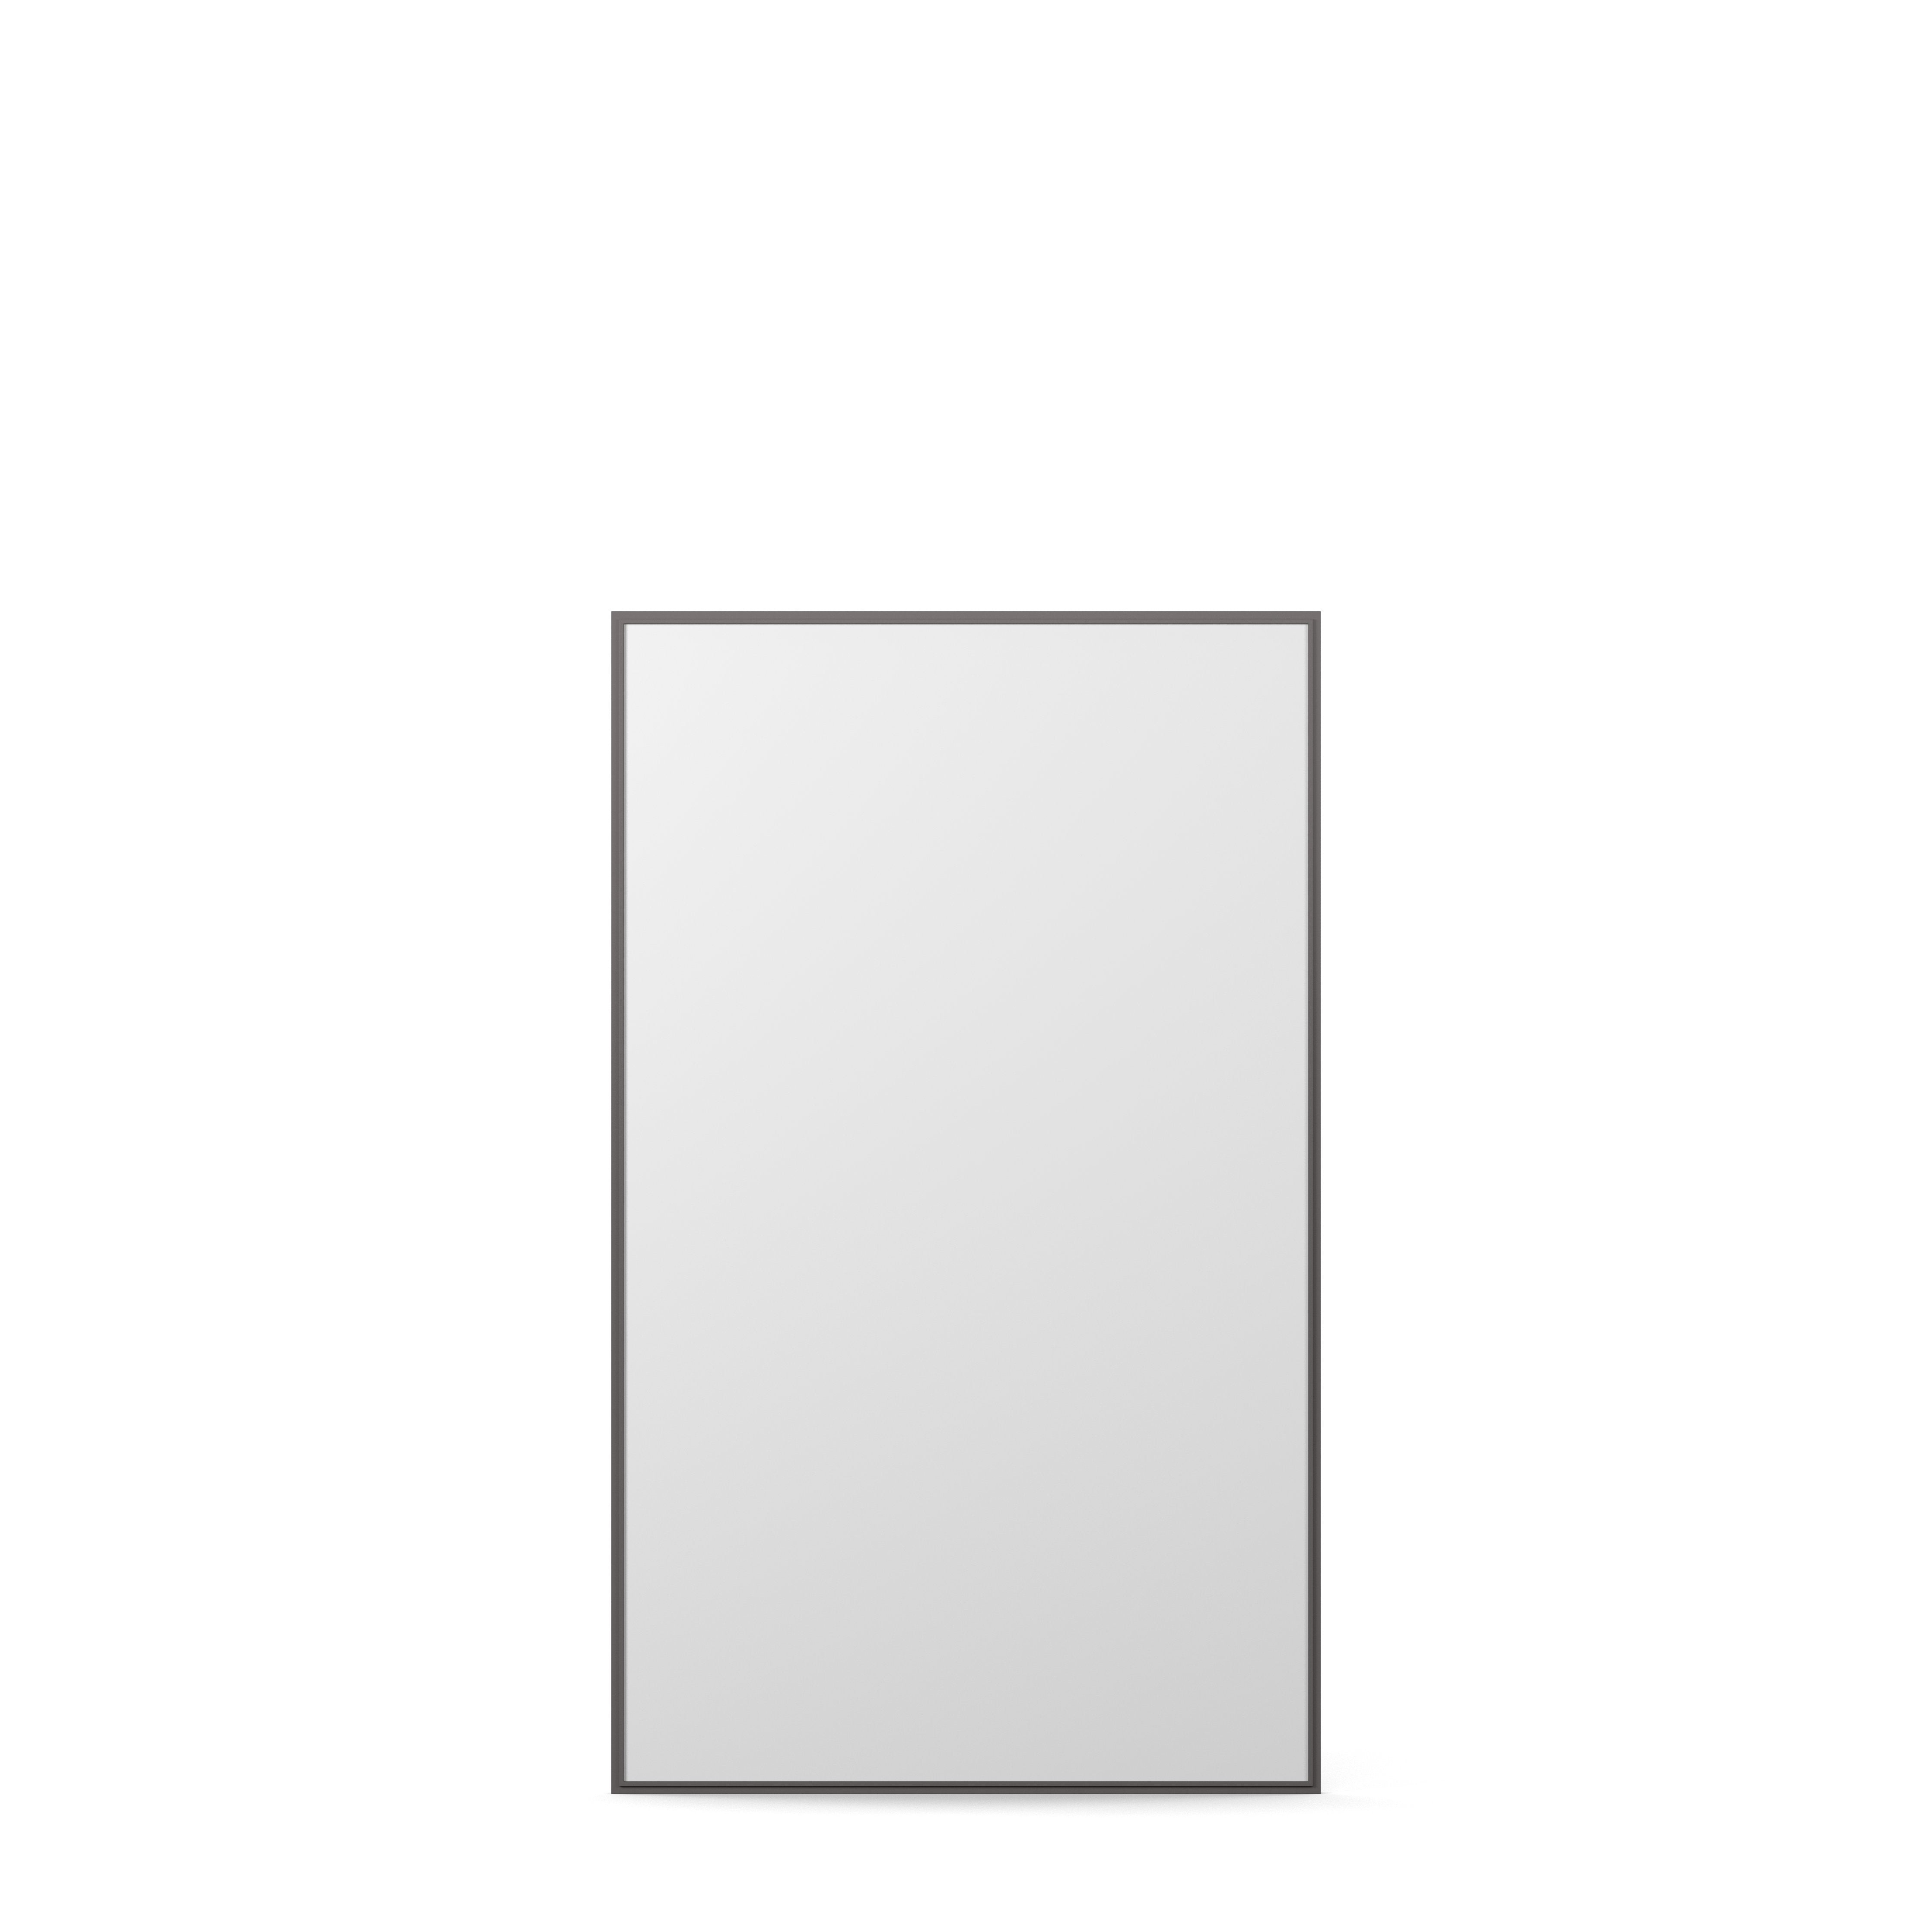 Englesson Edge Grey Cube Spegel Rektangulär 831EG #färg_Edge Grey #Colour_Edge Grey